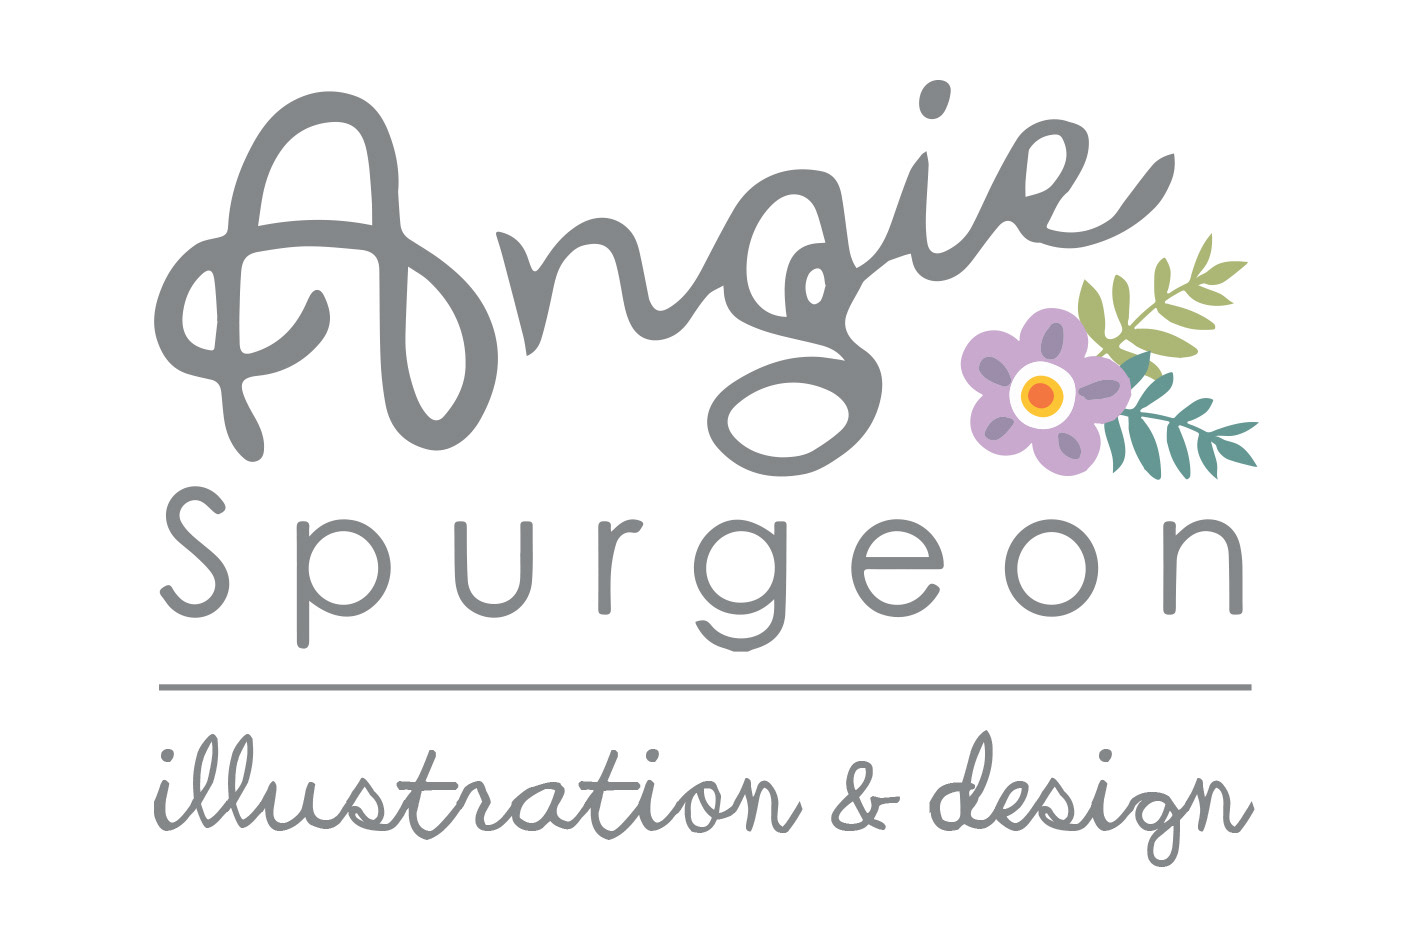 Angela Spurgeon